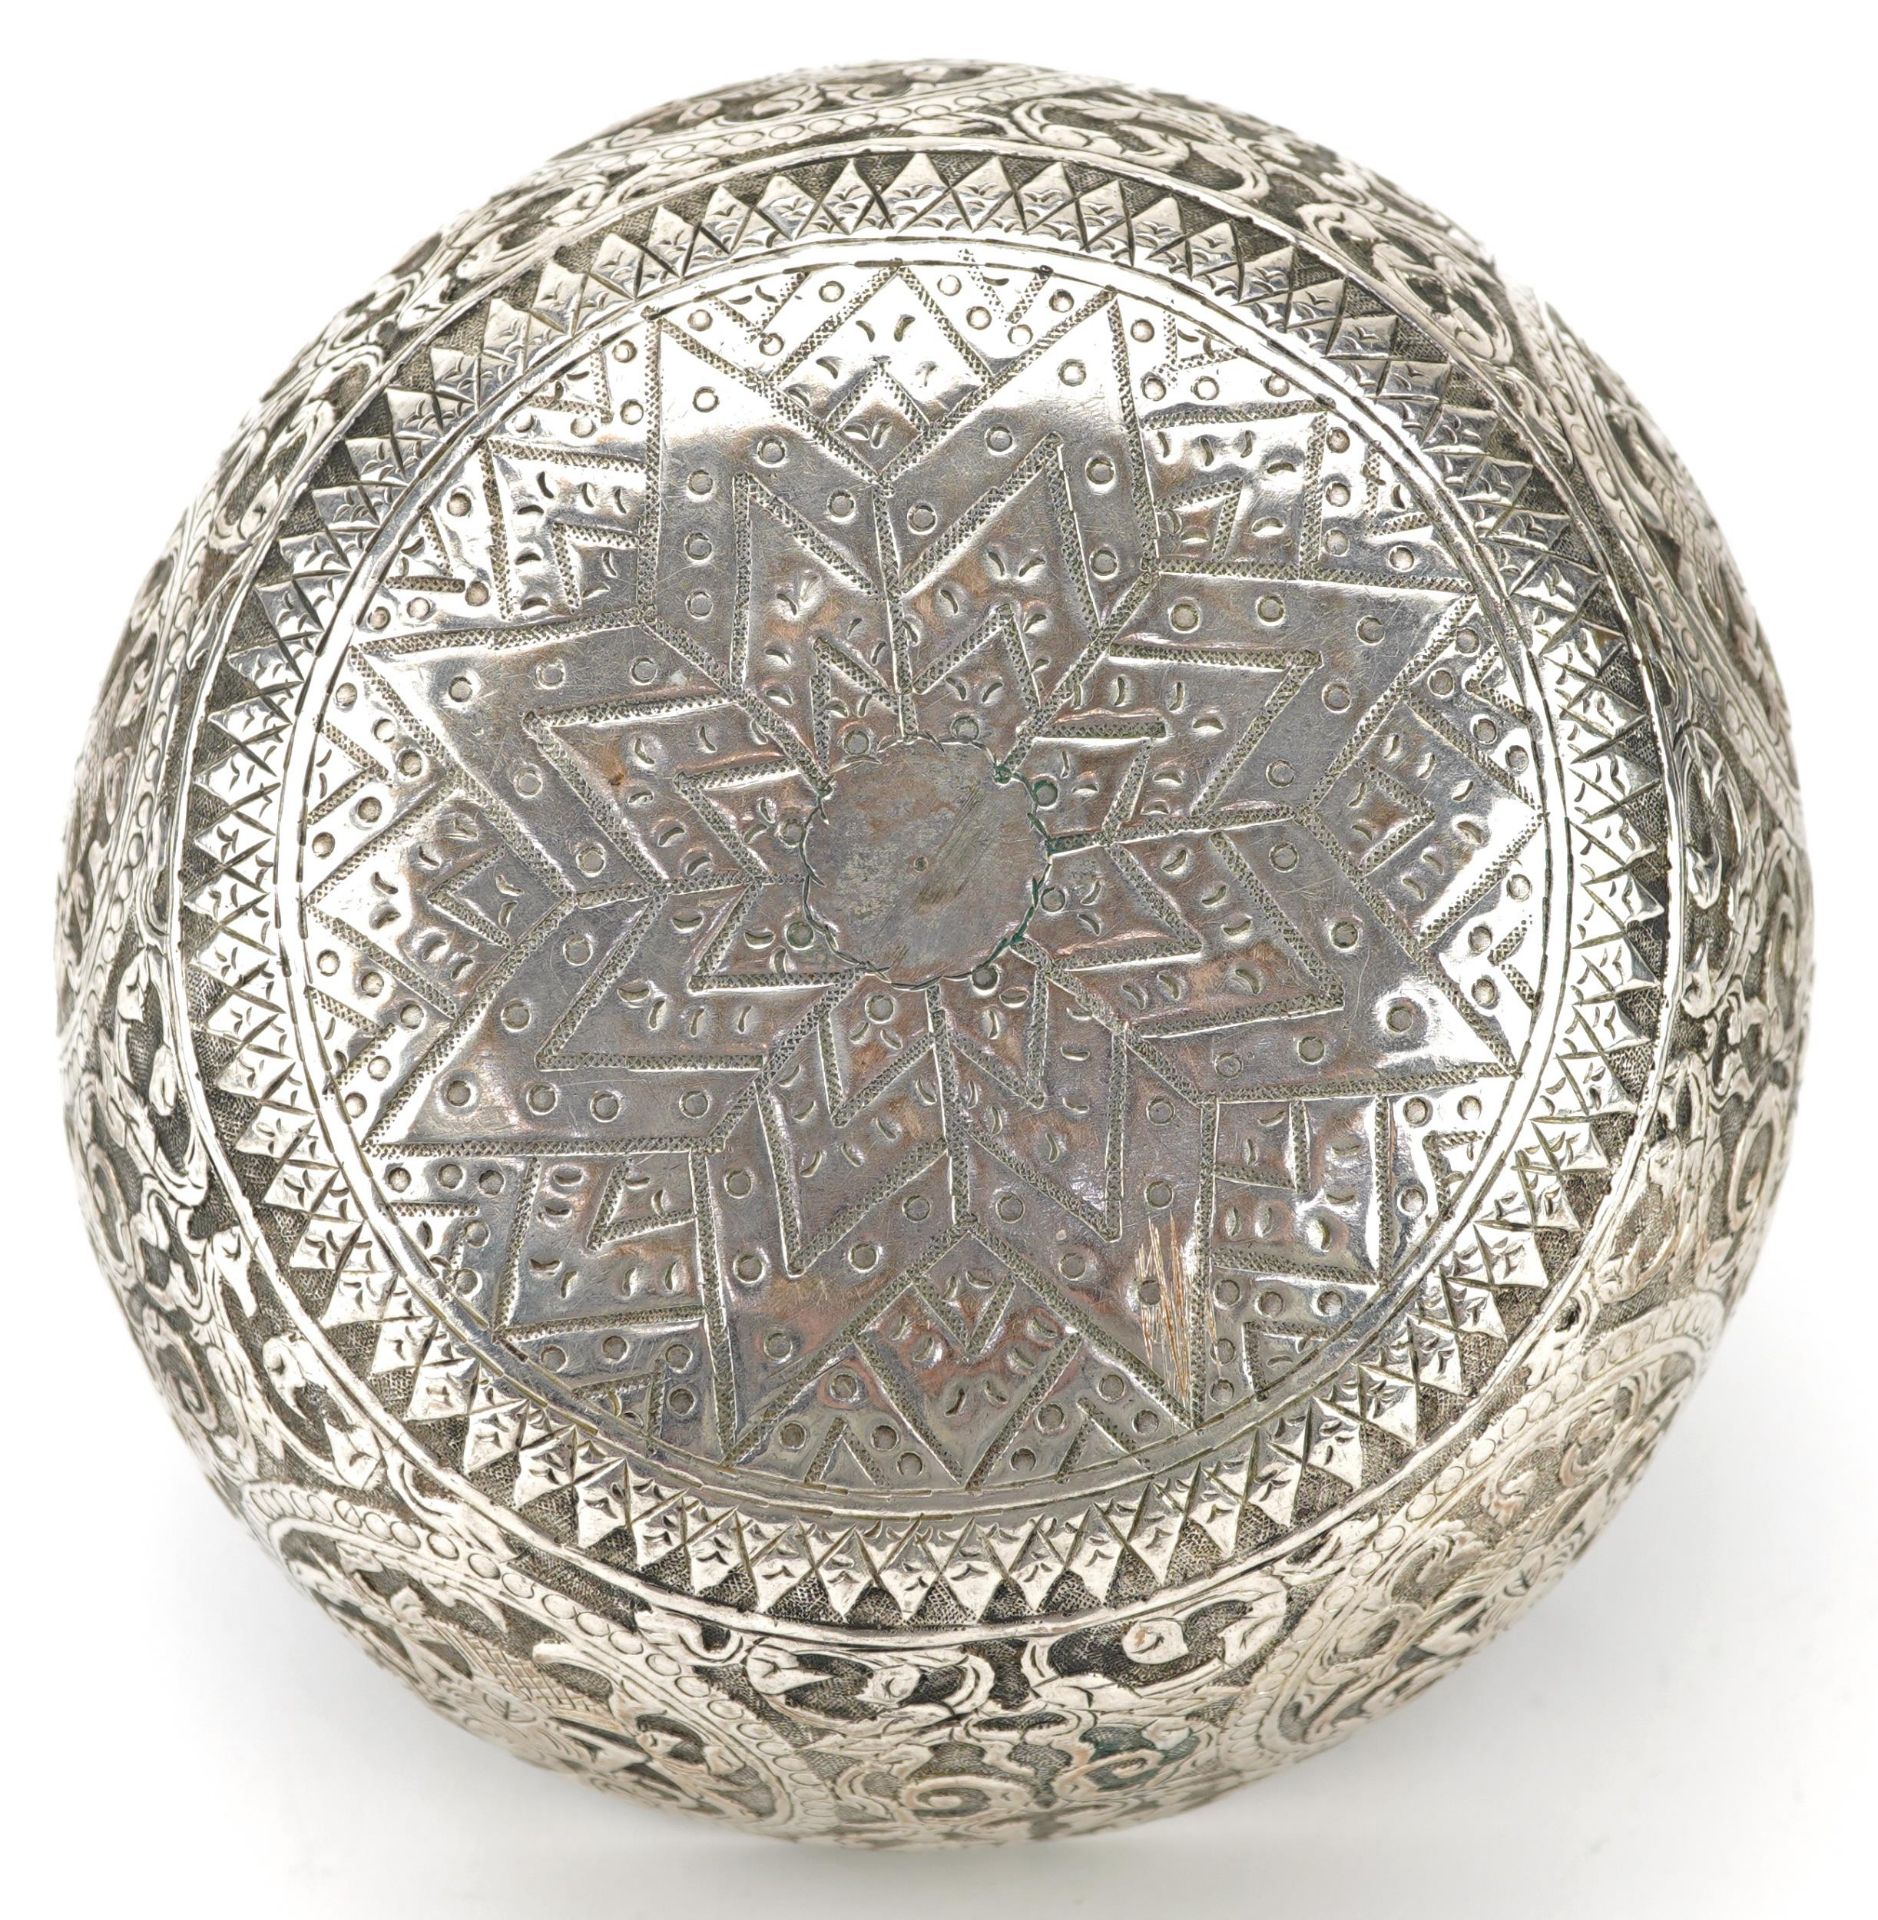 Tibetan white metal bowl embossed with deities, 15.5cm in diameter, 171.0g - Image 6 of 6